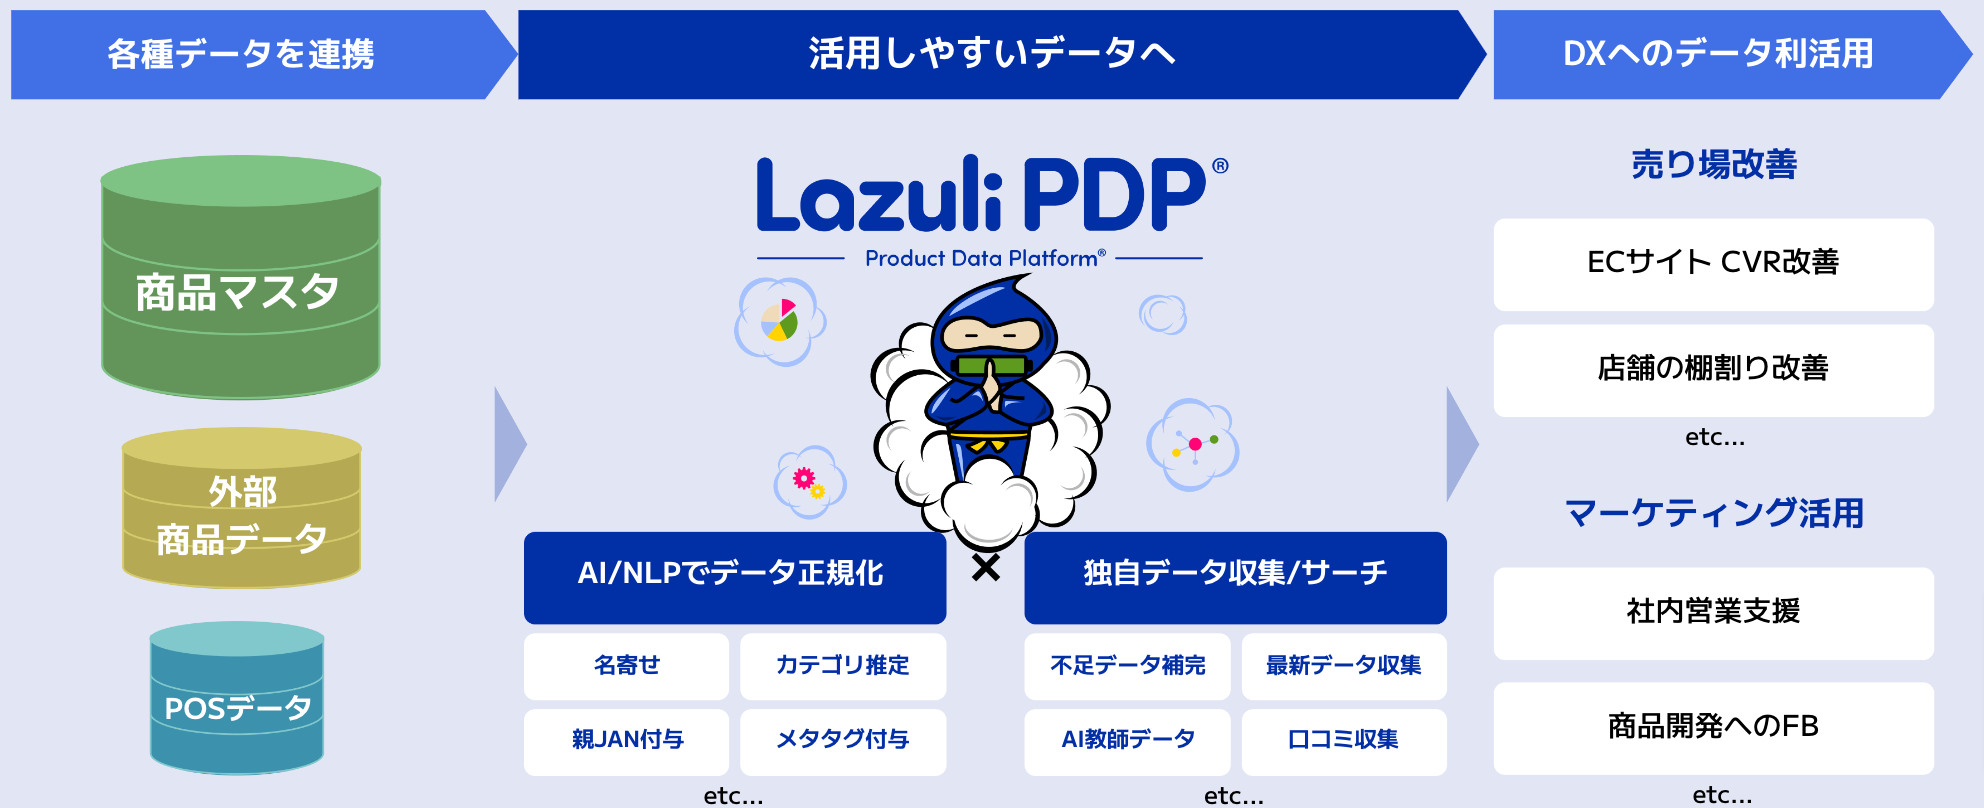 Lazuli_PDP